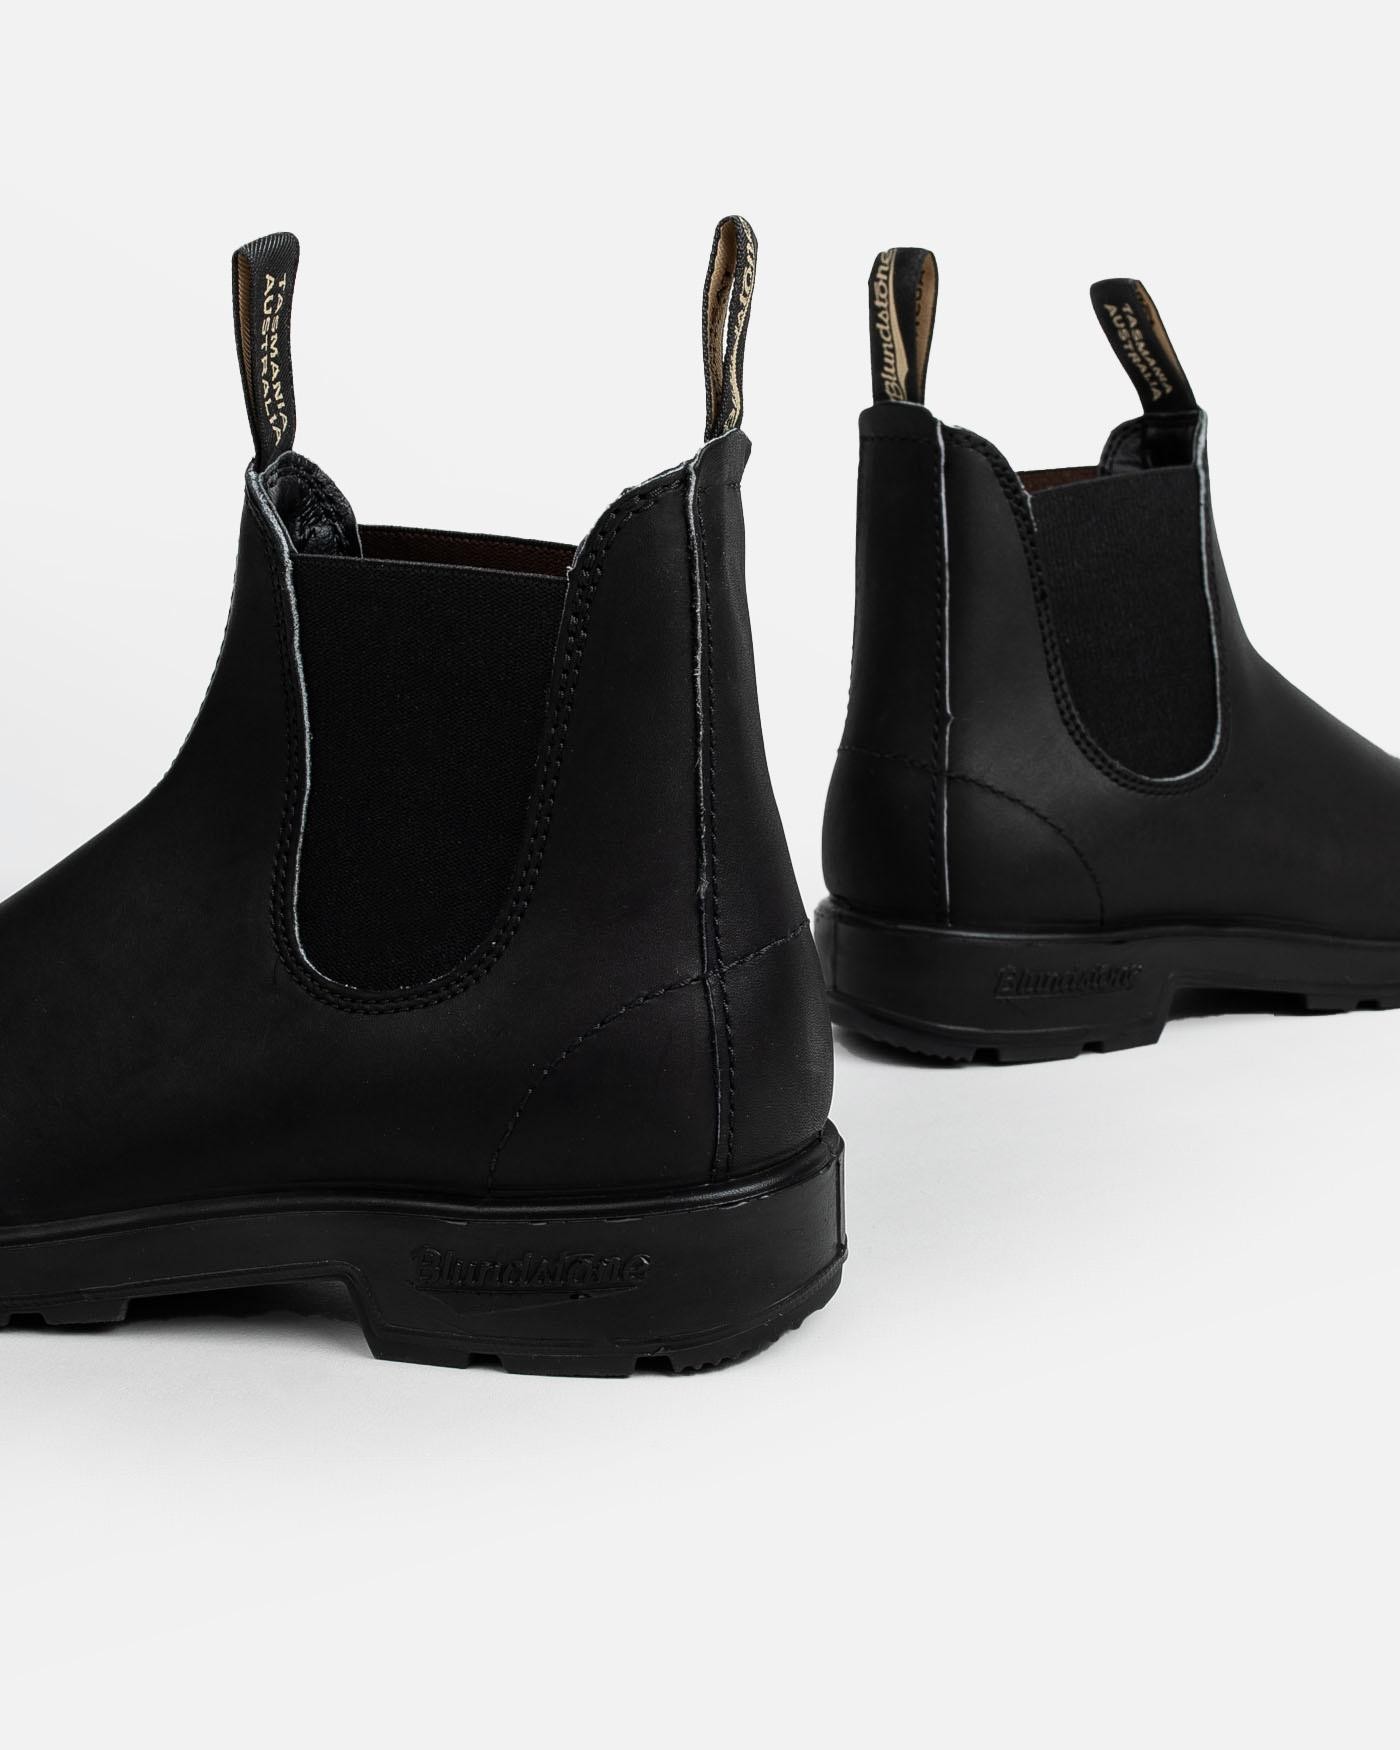 blundstone-botas-chelsea-classic-500-boots-black-negras-6